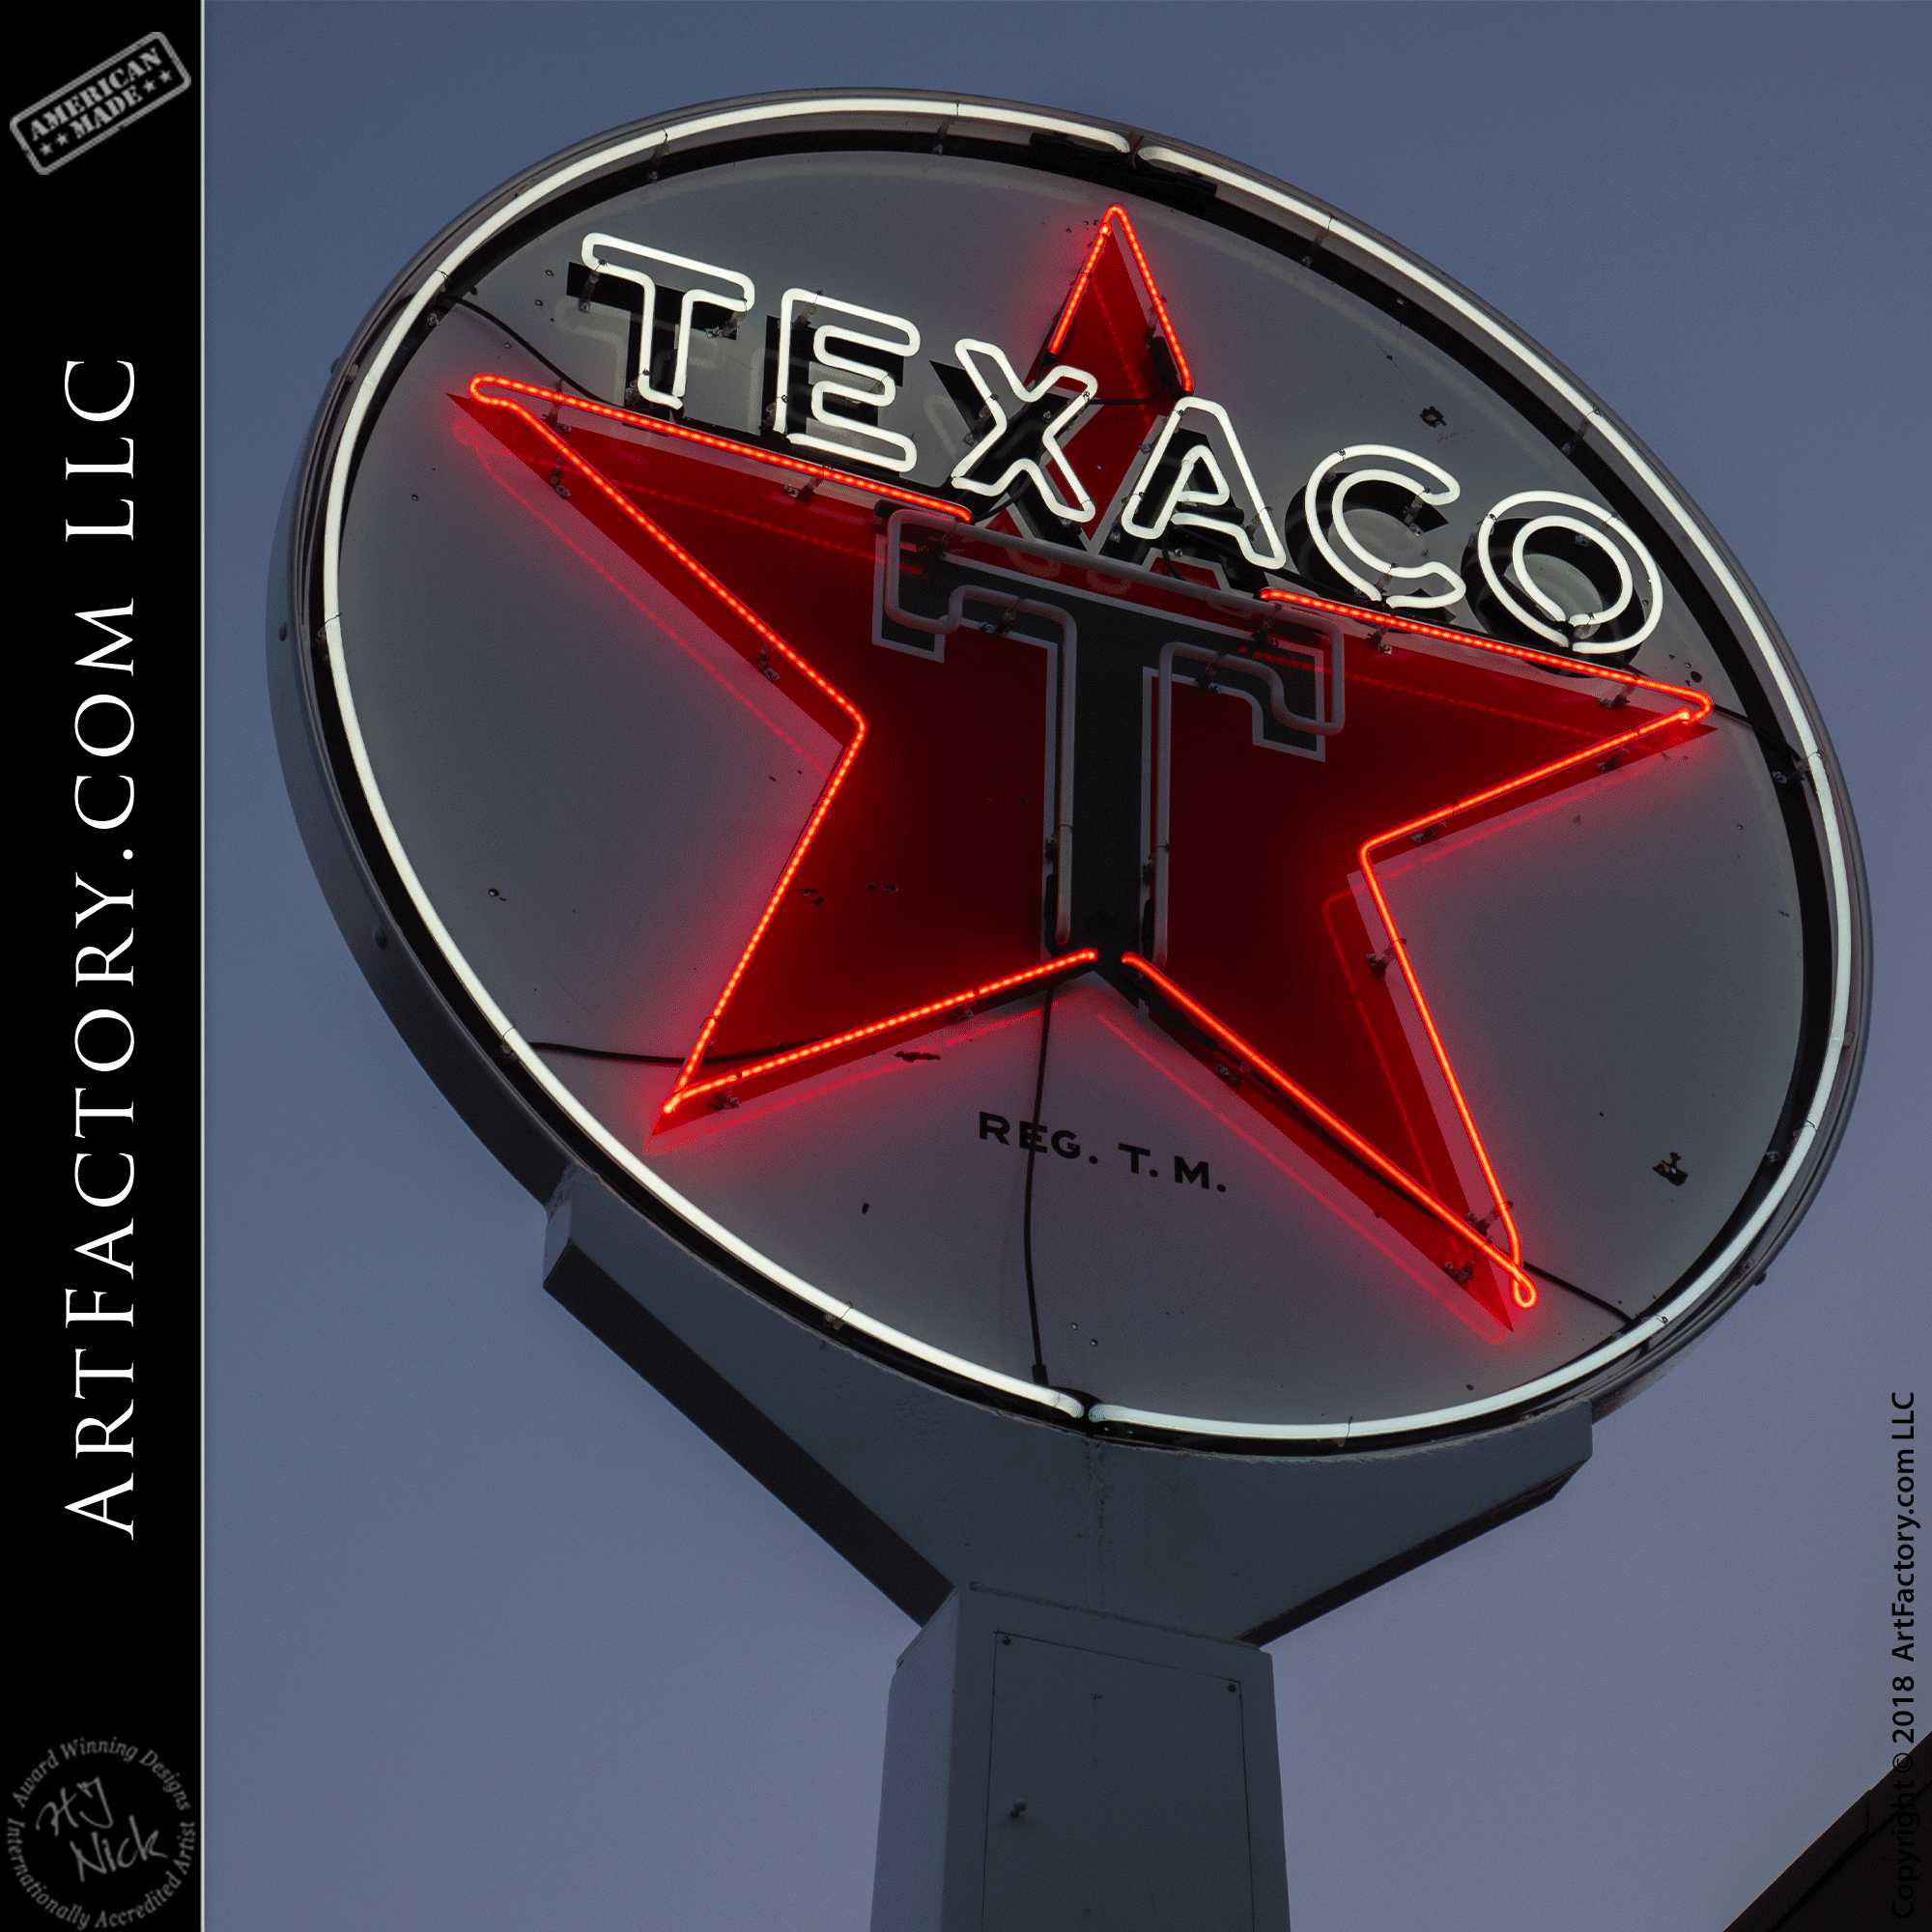 New Vintage Texaco Gas Station Neon Roadside Poll